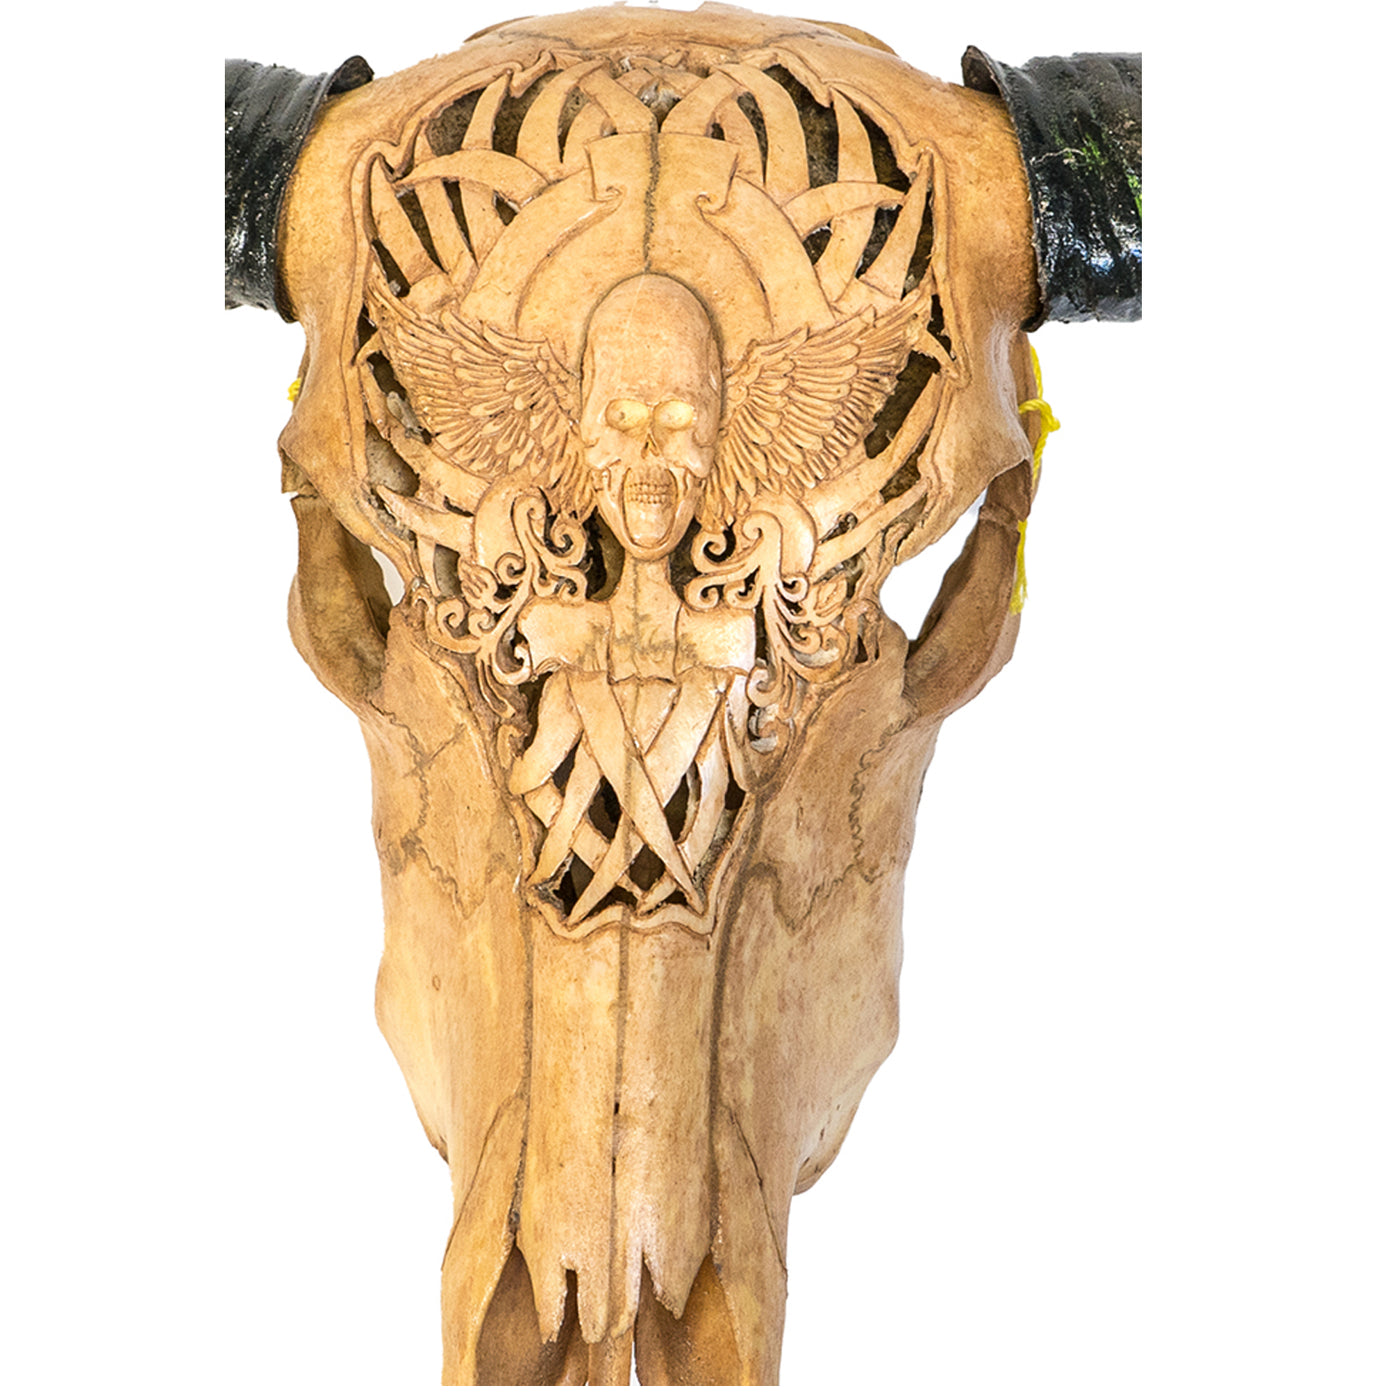 Hand Carved Animal Skulls - Buffalo, Ram, Wild Boar & Replica Human Skulls